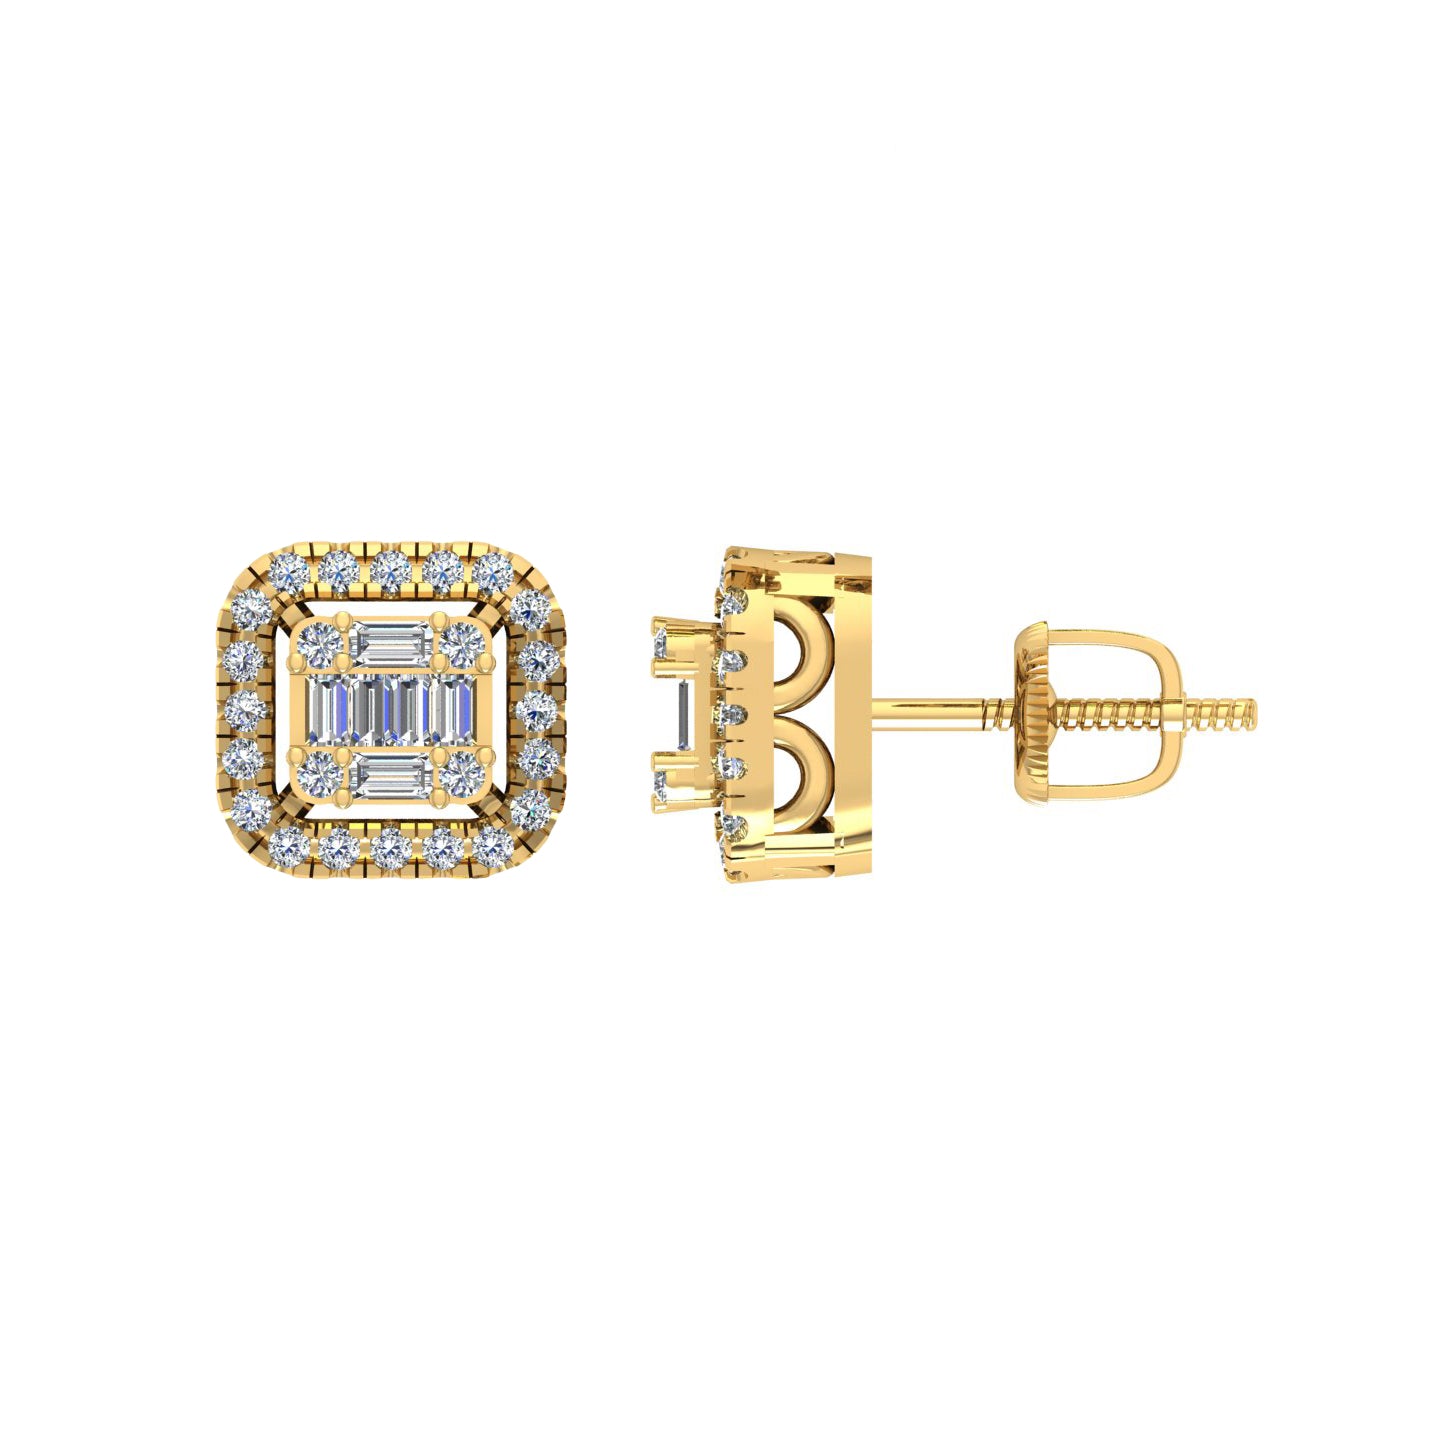 10 Karat Yellow Gold 0.33 Carat Diamond Square Earrings-0130017-YG